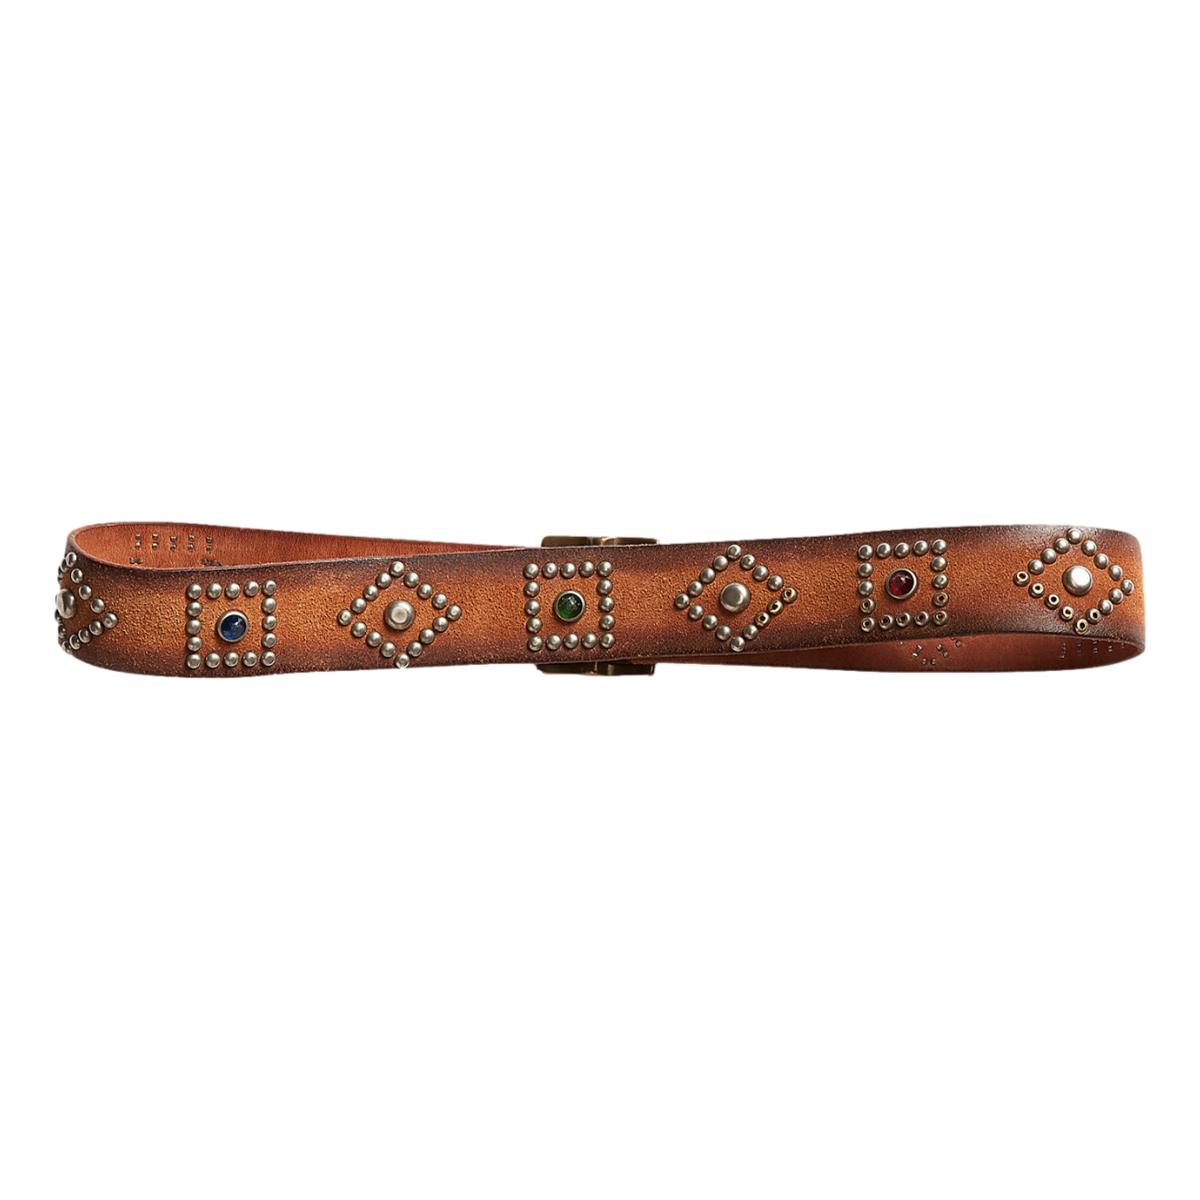 Studded Roughout Leather Belt Light Brown - Belts